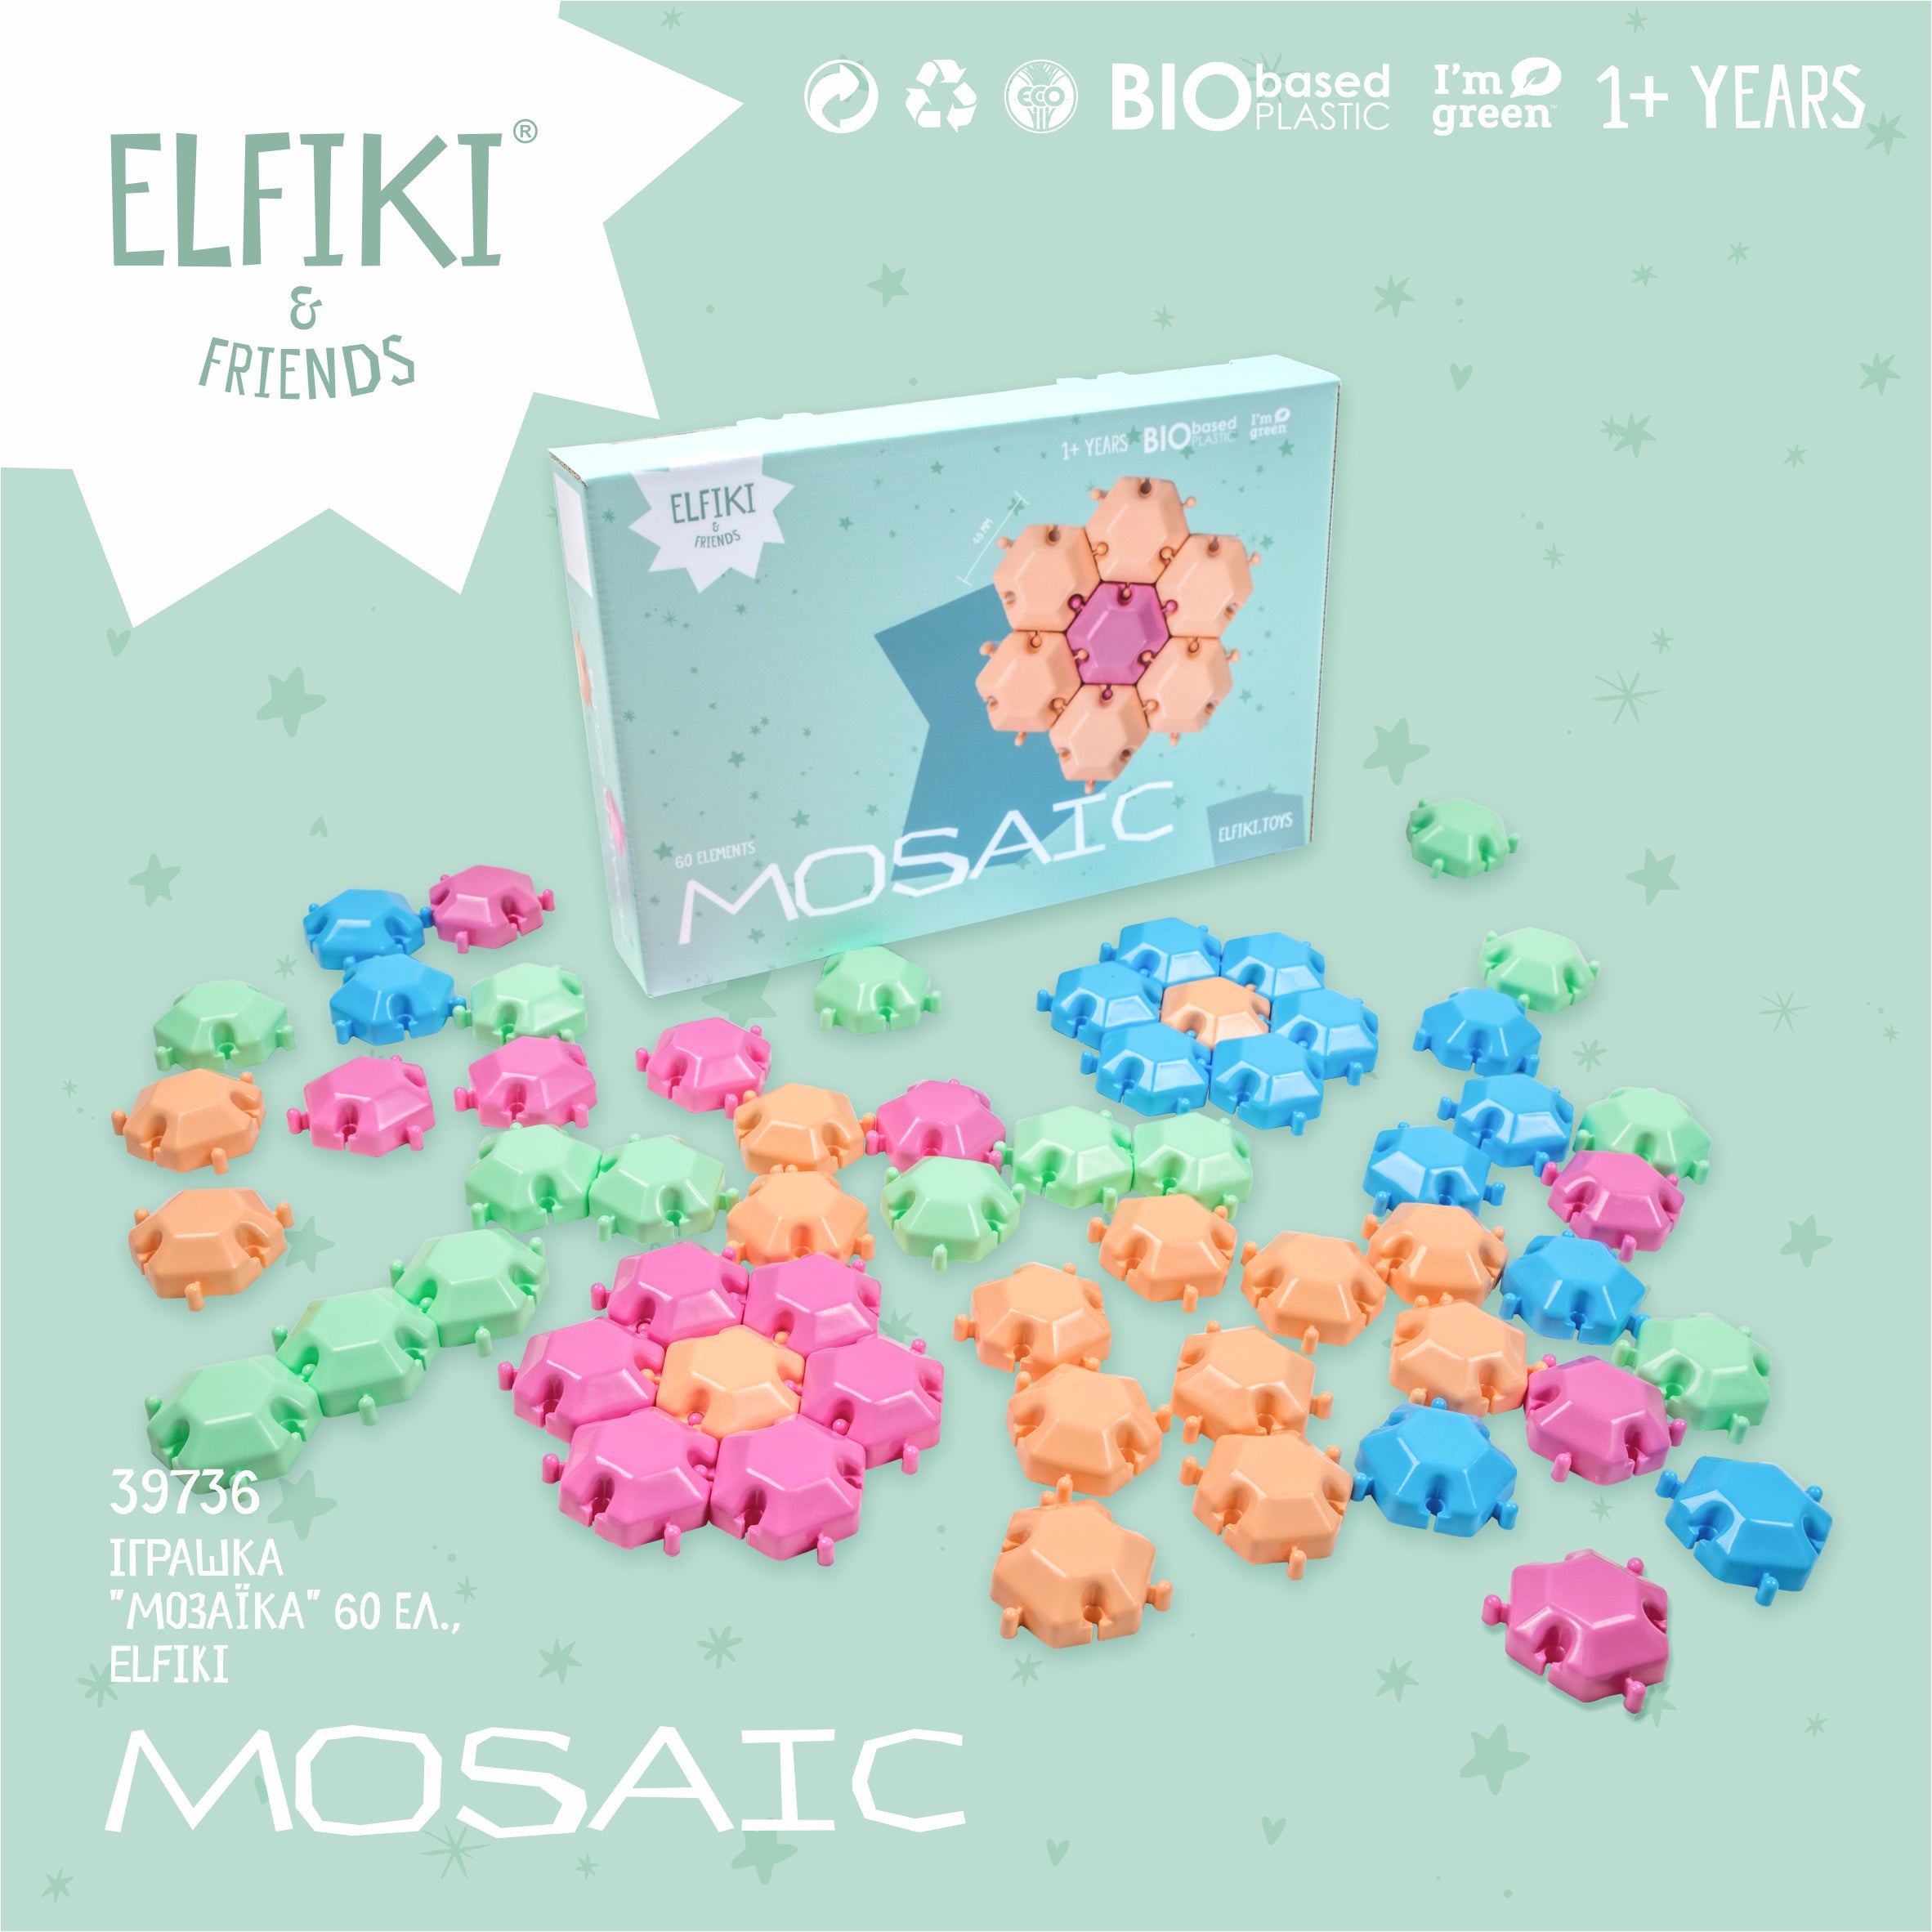 Bioplastic toys - Mosaic educational toy.